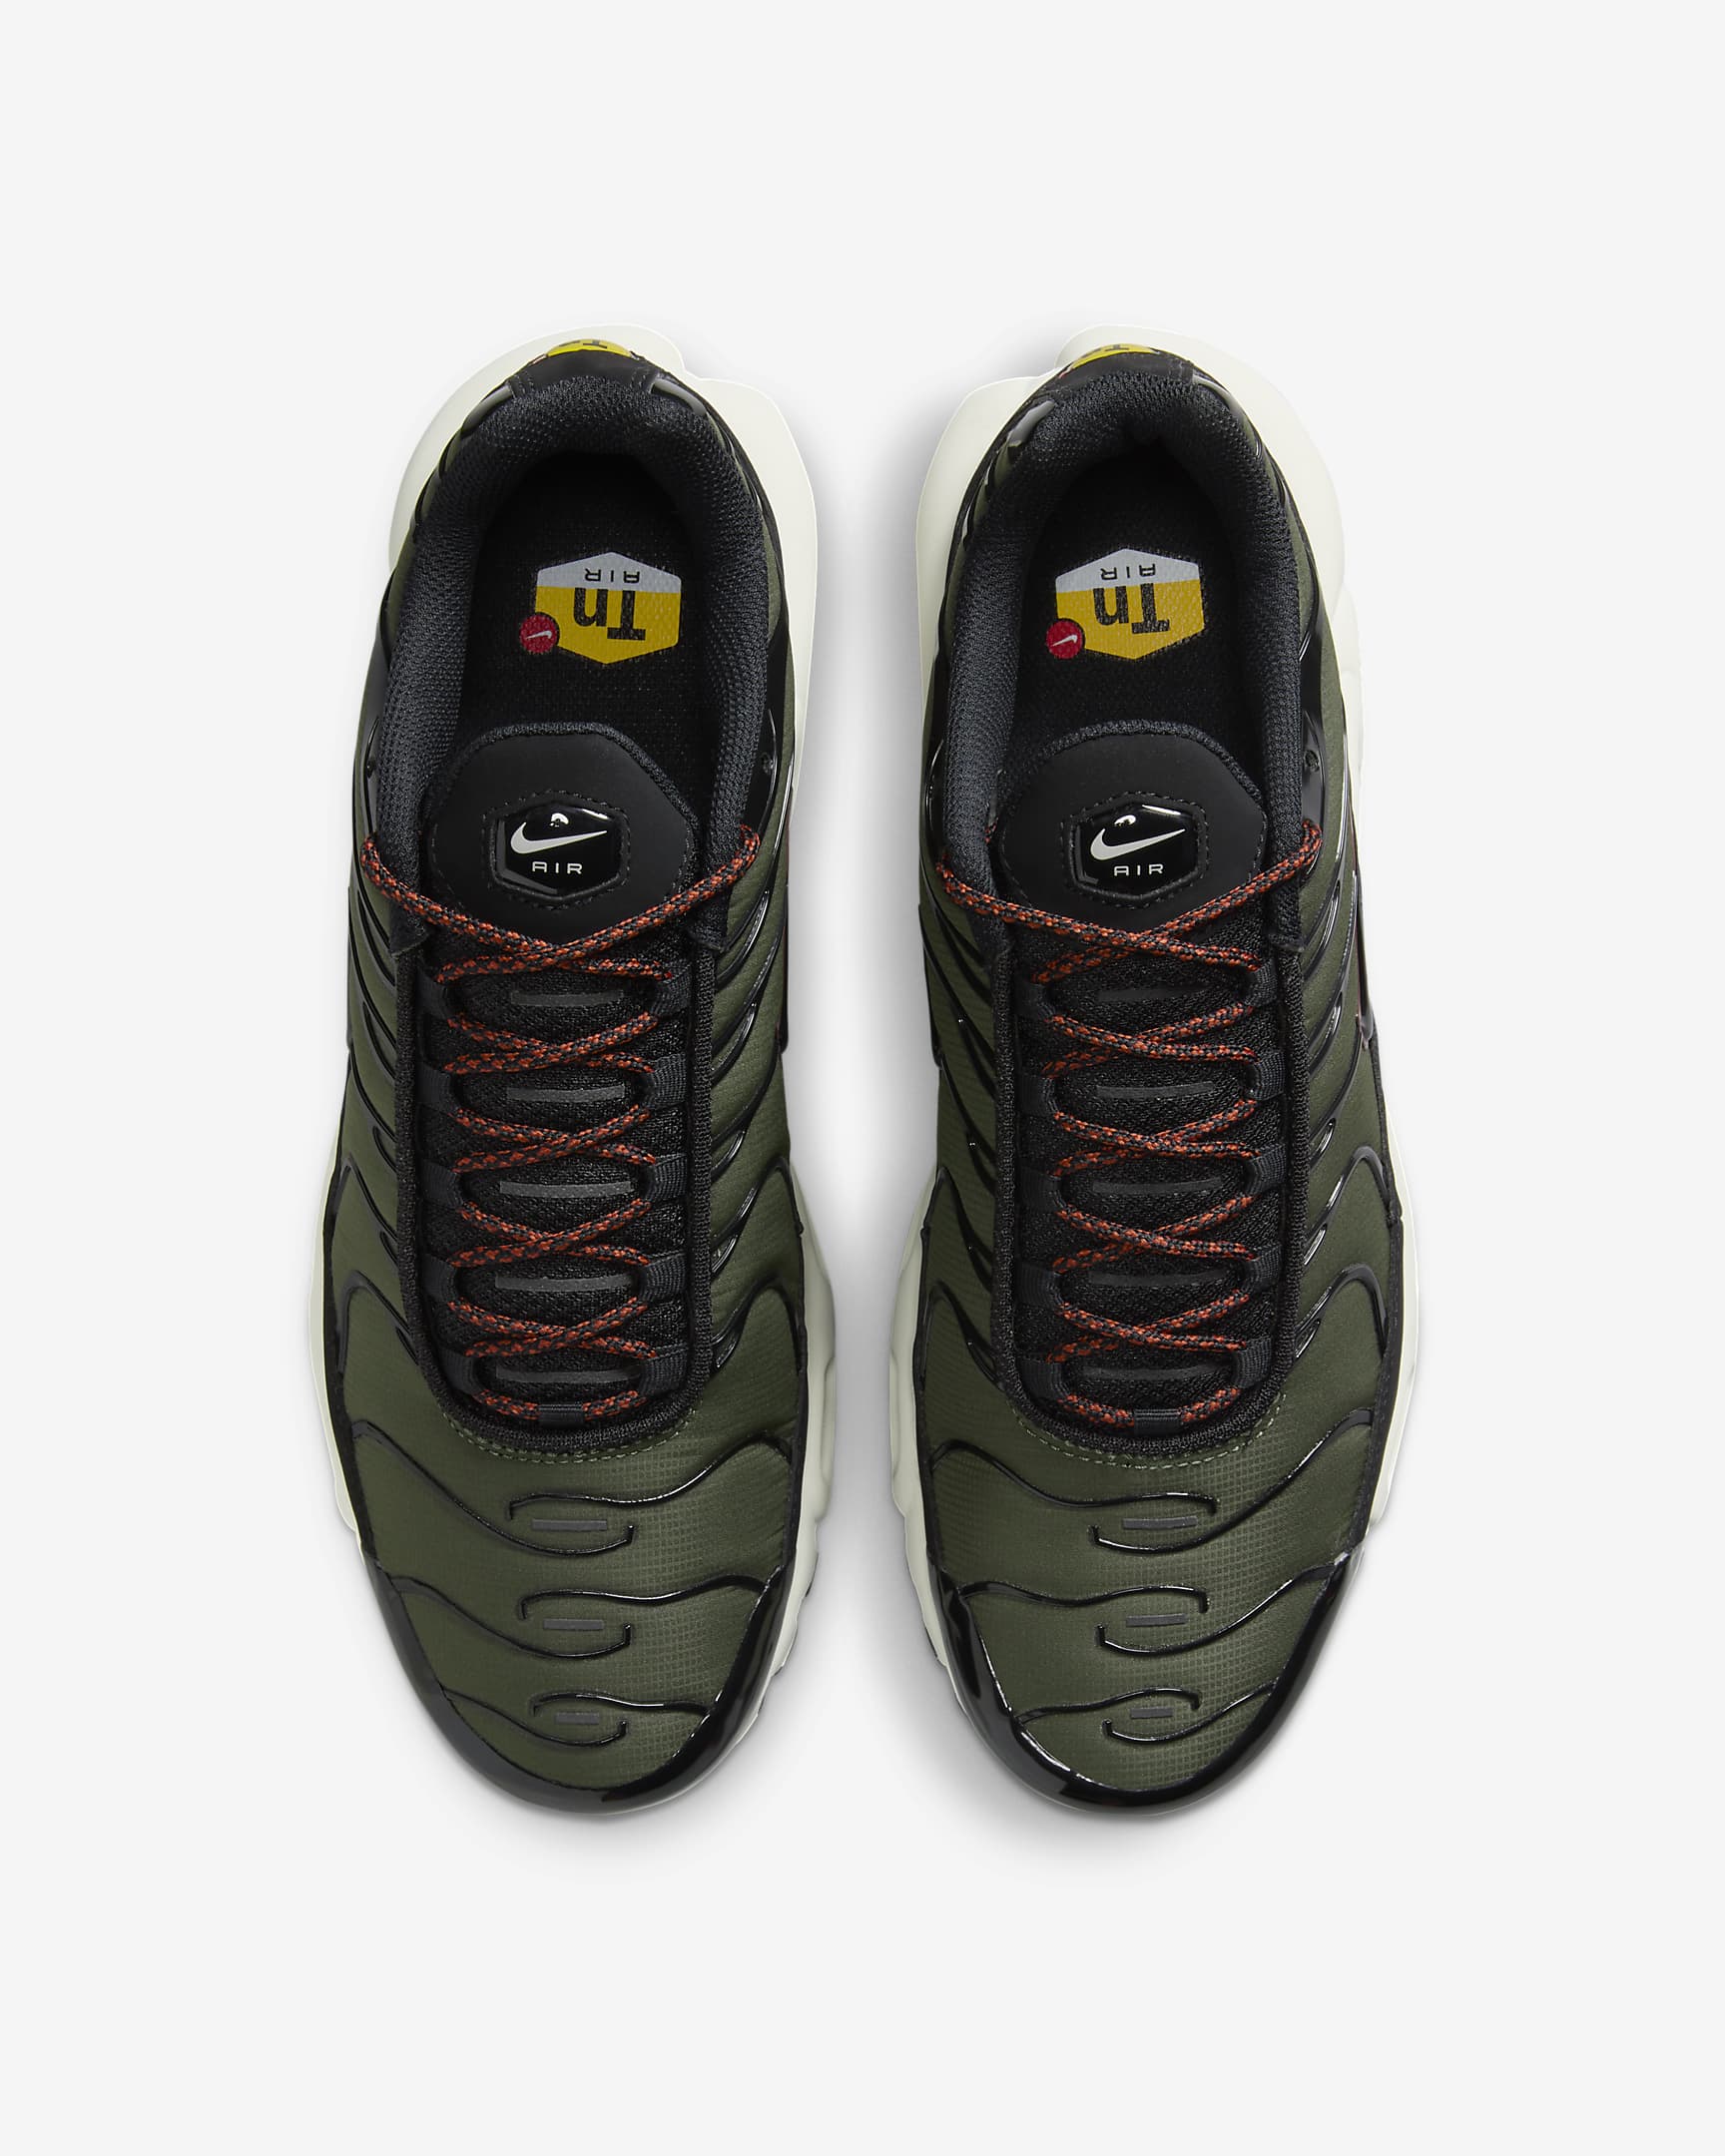 Sneaker Fanatics, Brace Yourselves: Nike Air Max Plus Men’s Shoes Review Unveiled!